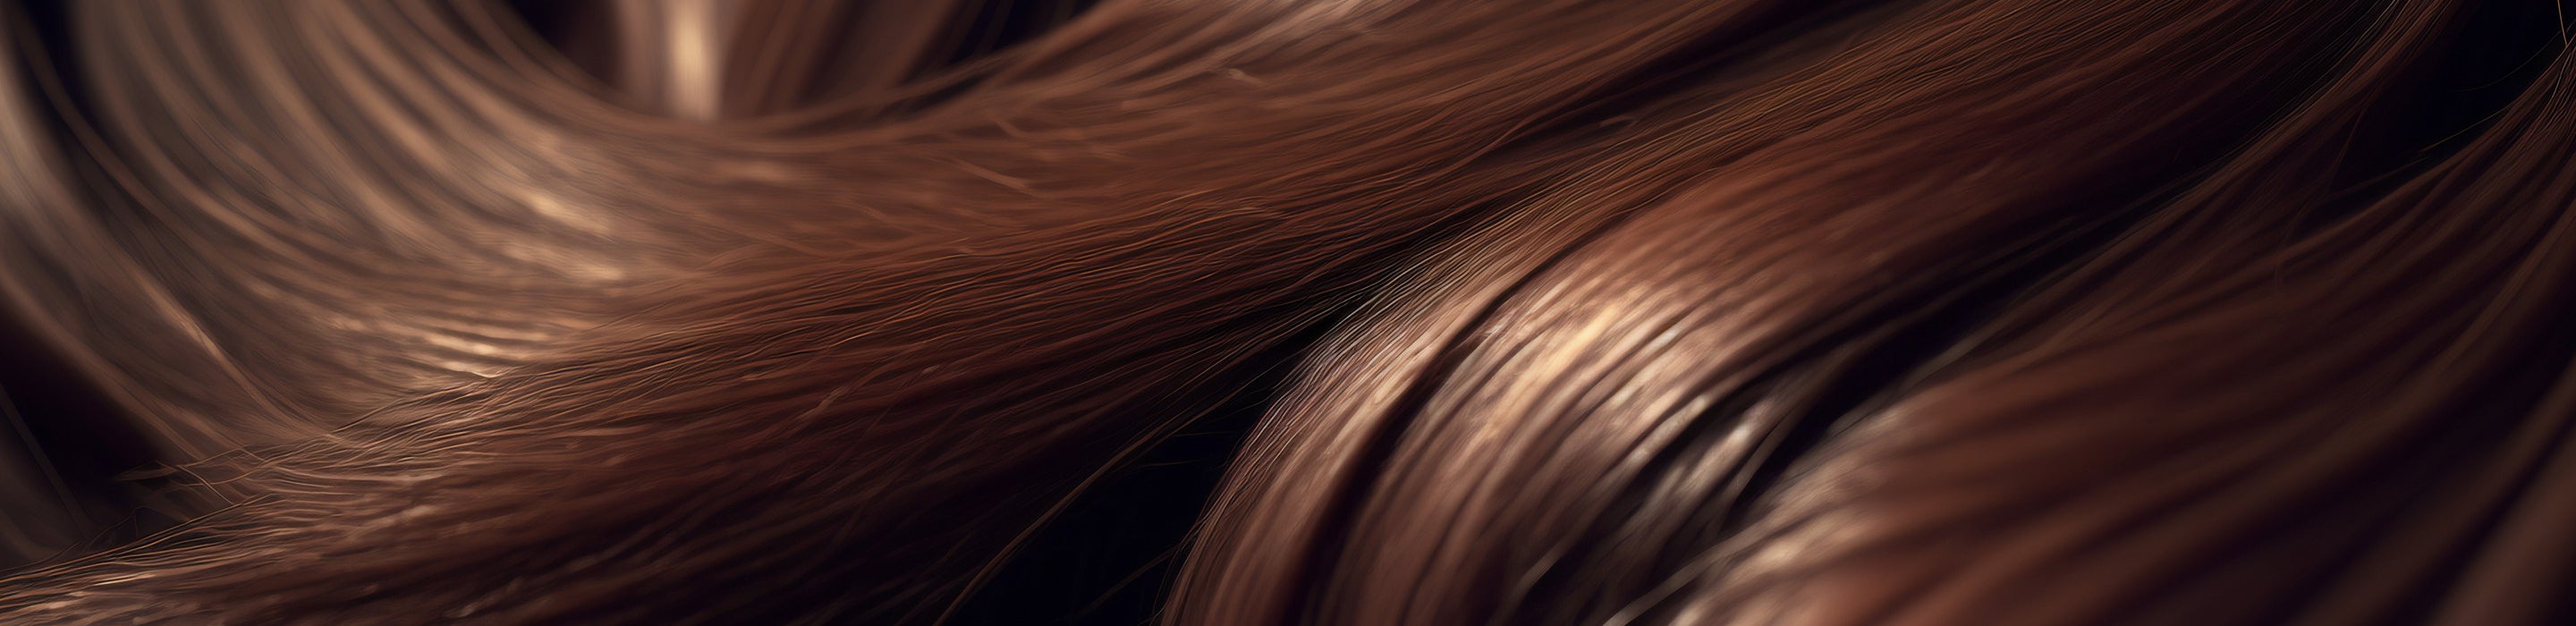 Close up of shiny brown hair.